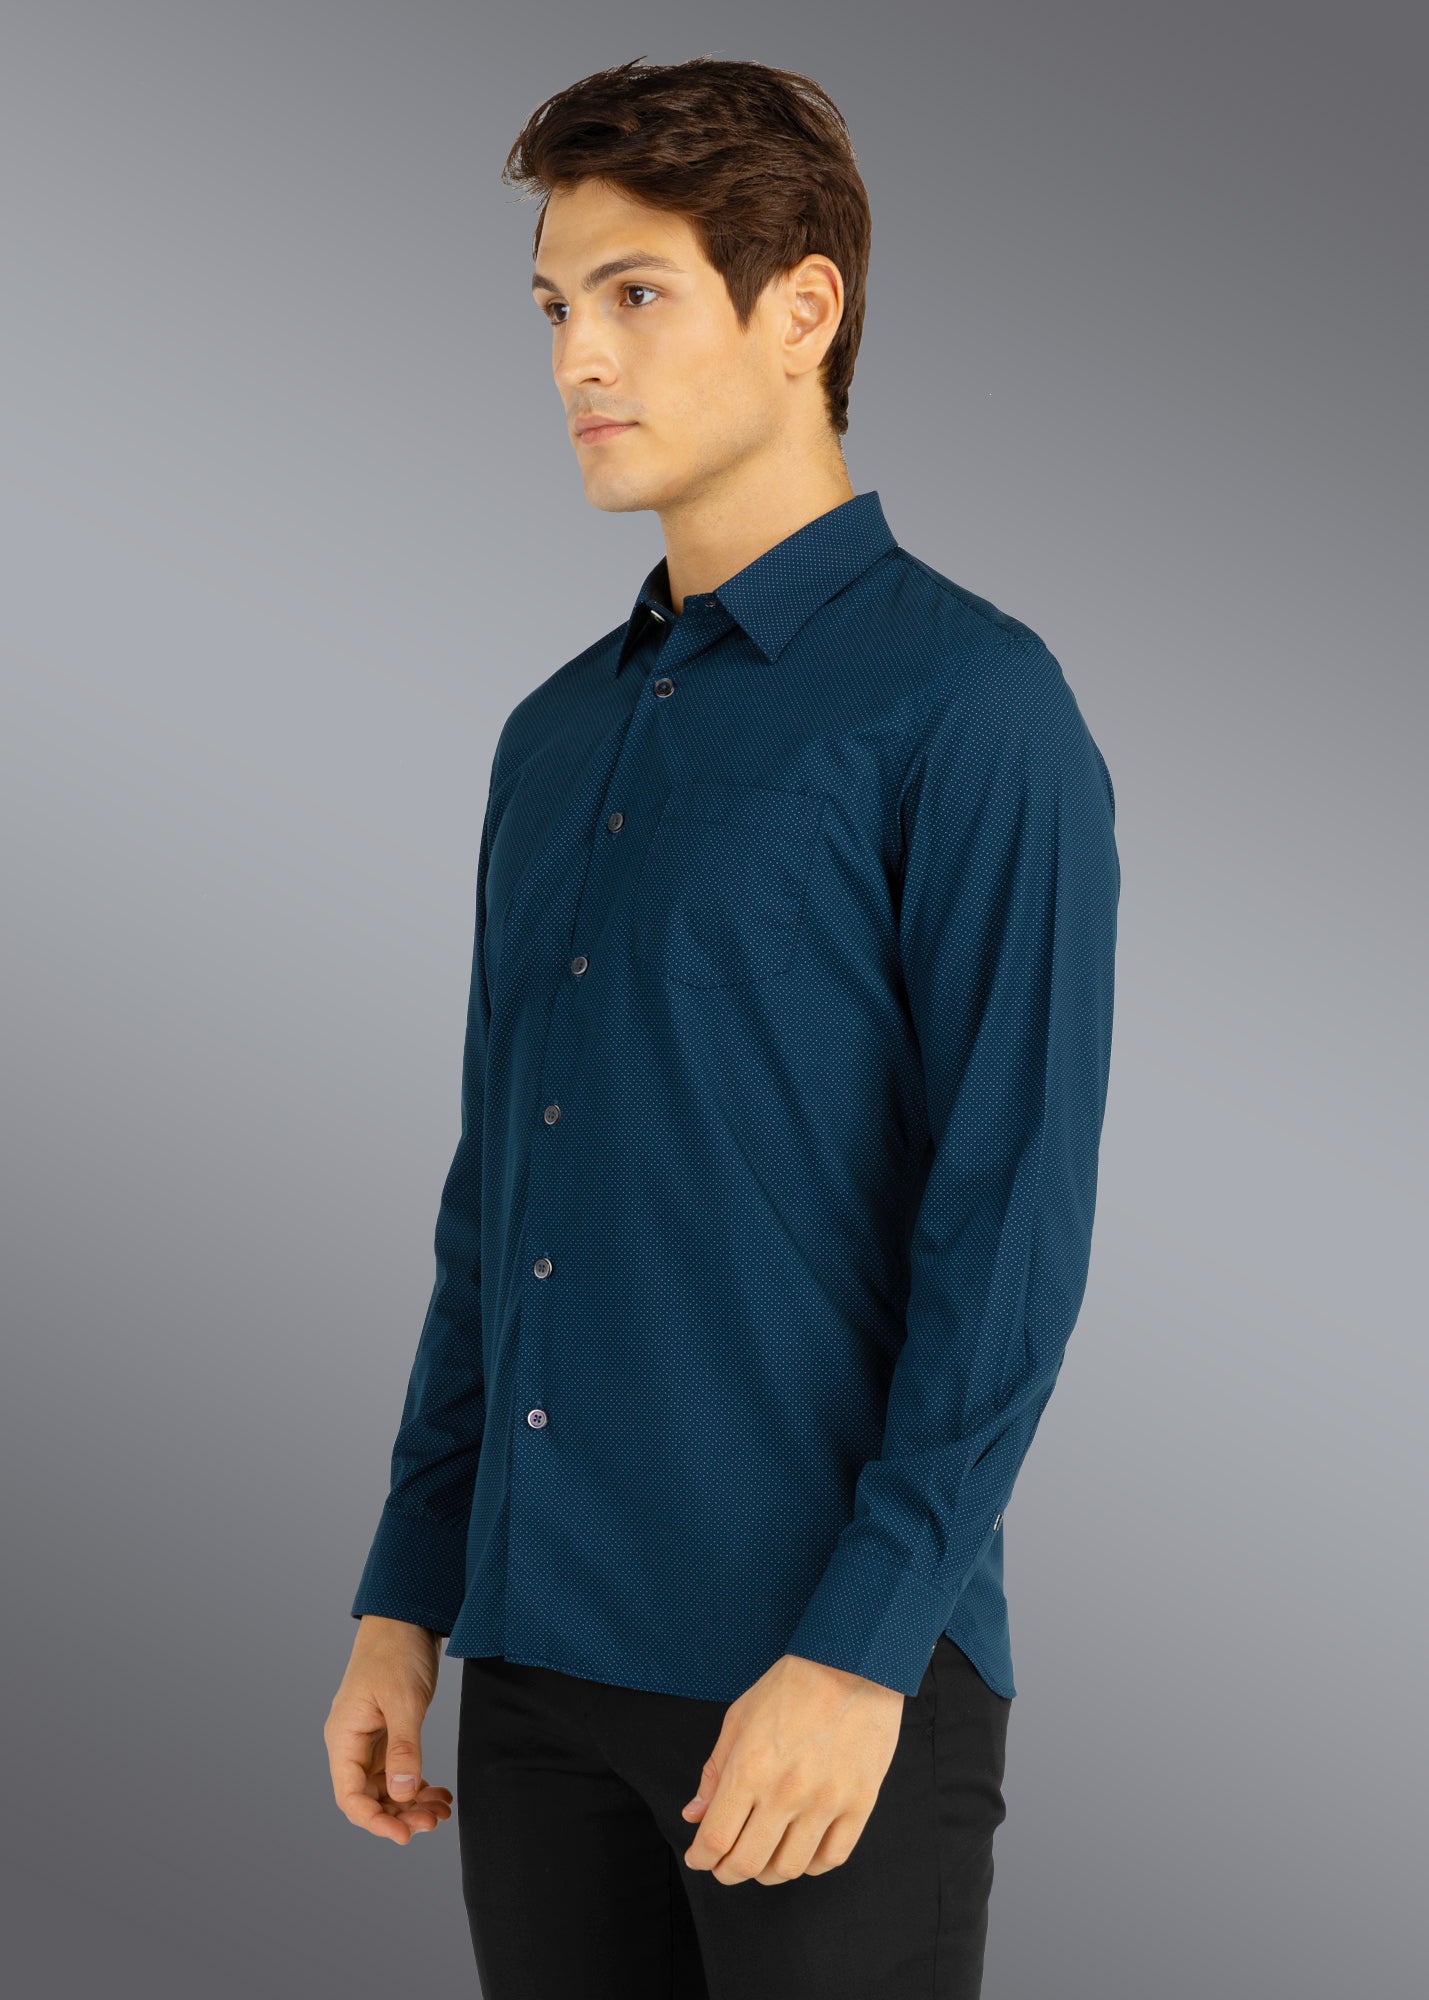 Bamboo Tech® Dot-print Slim-fit Shirt